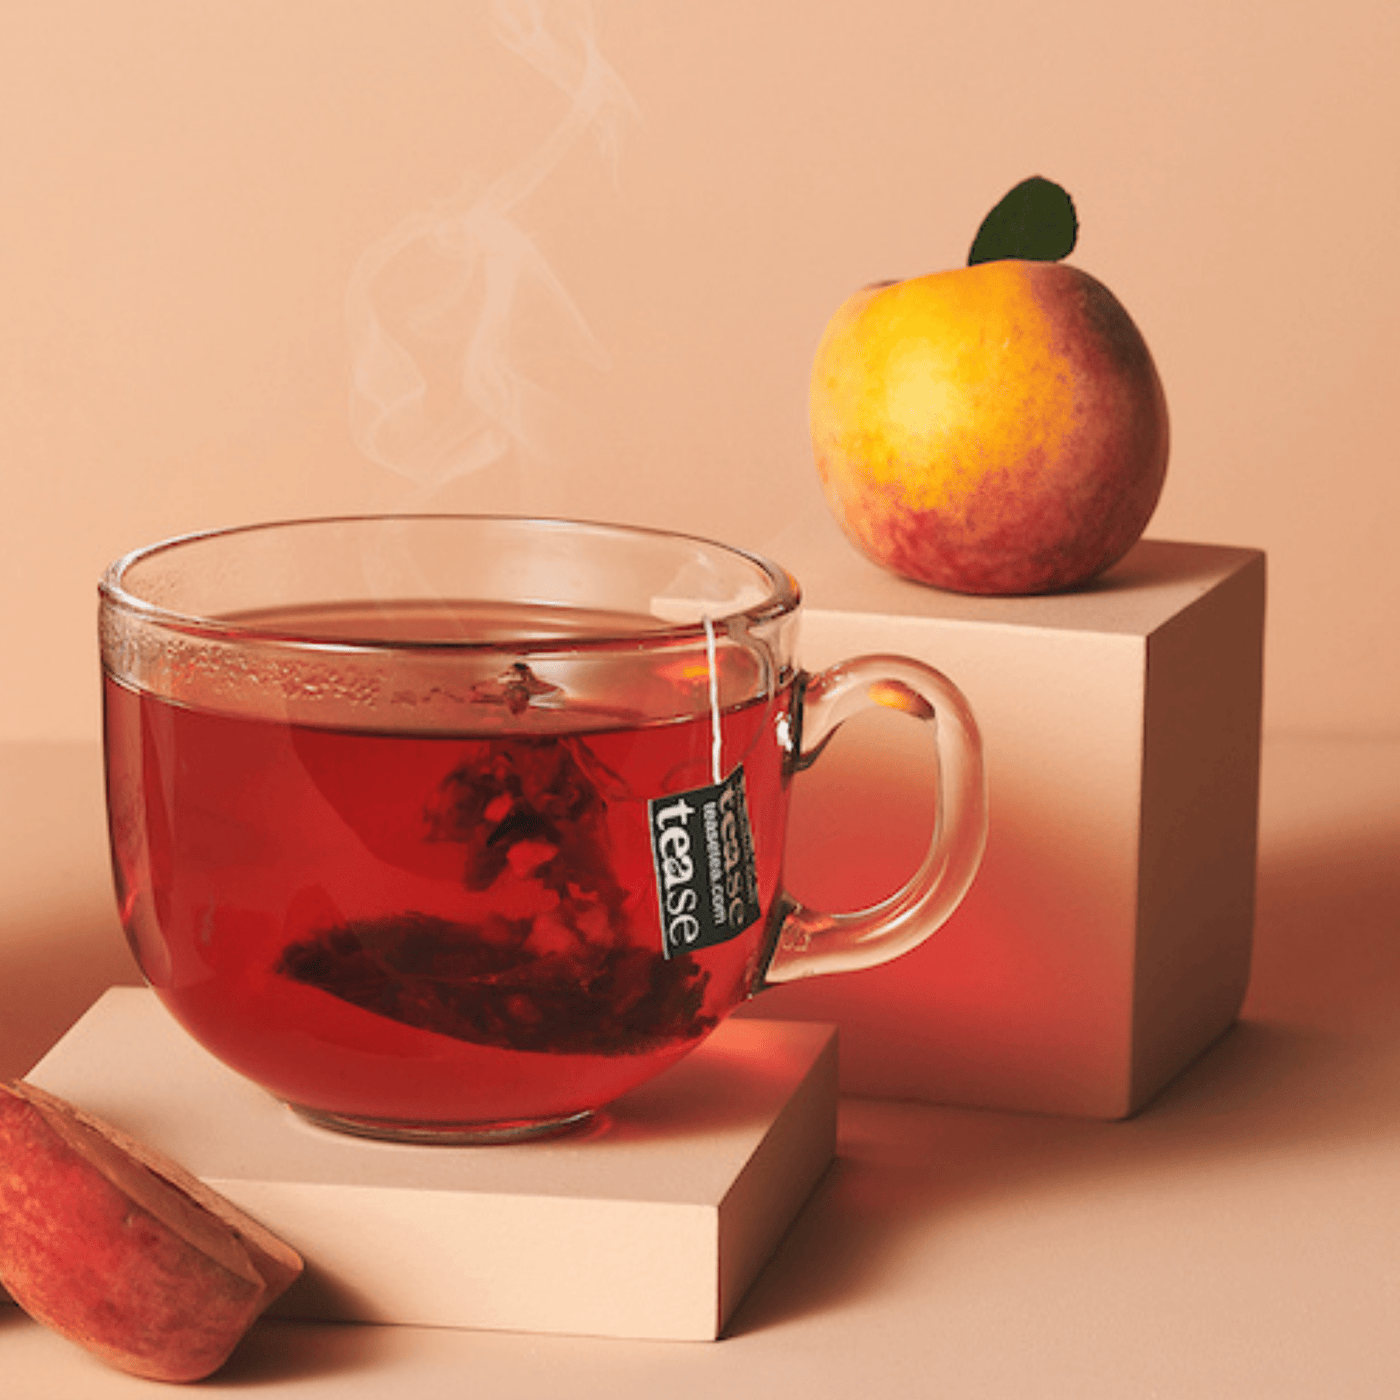 Tease Tea tube-refill Peach, Please Refill (Seasonal) Peach, Please Tea Refill  | Hydration Support - Tease Wellness Blends